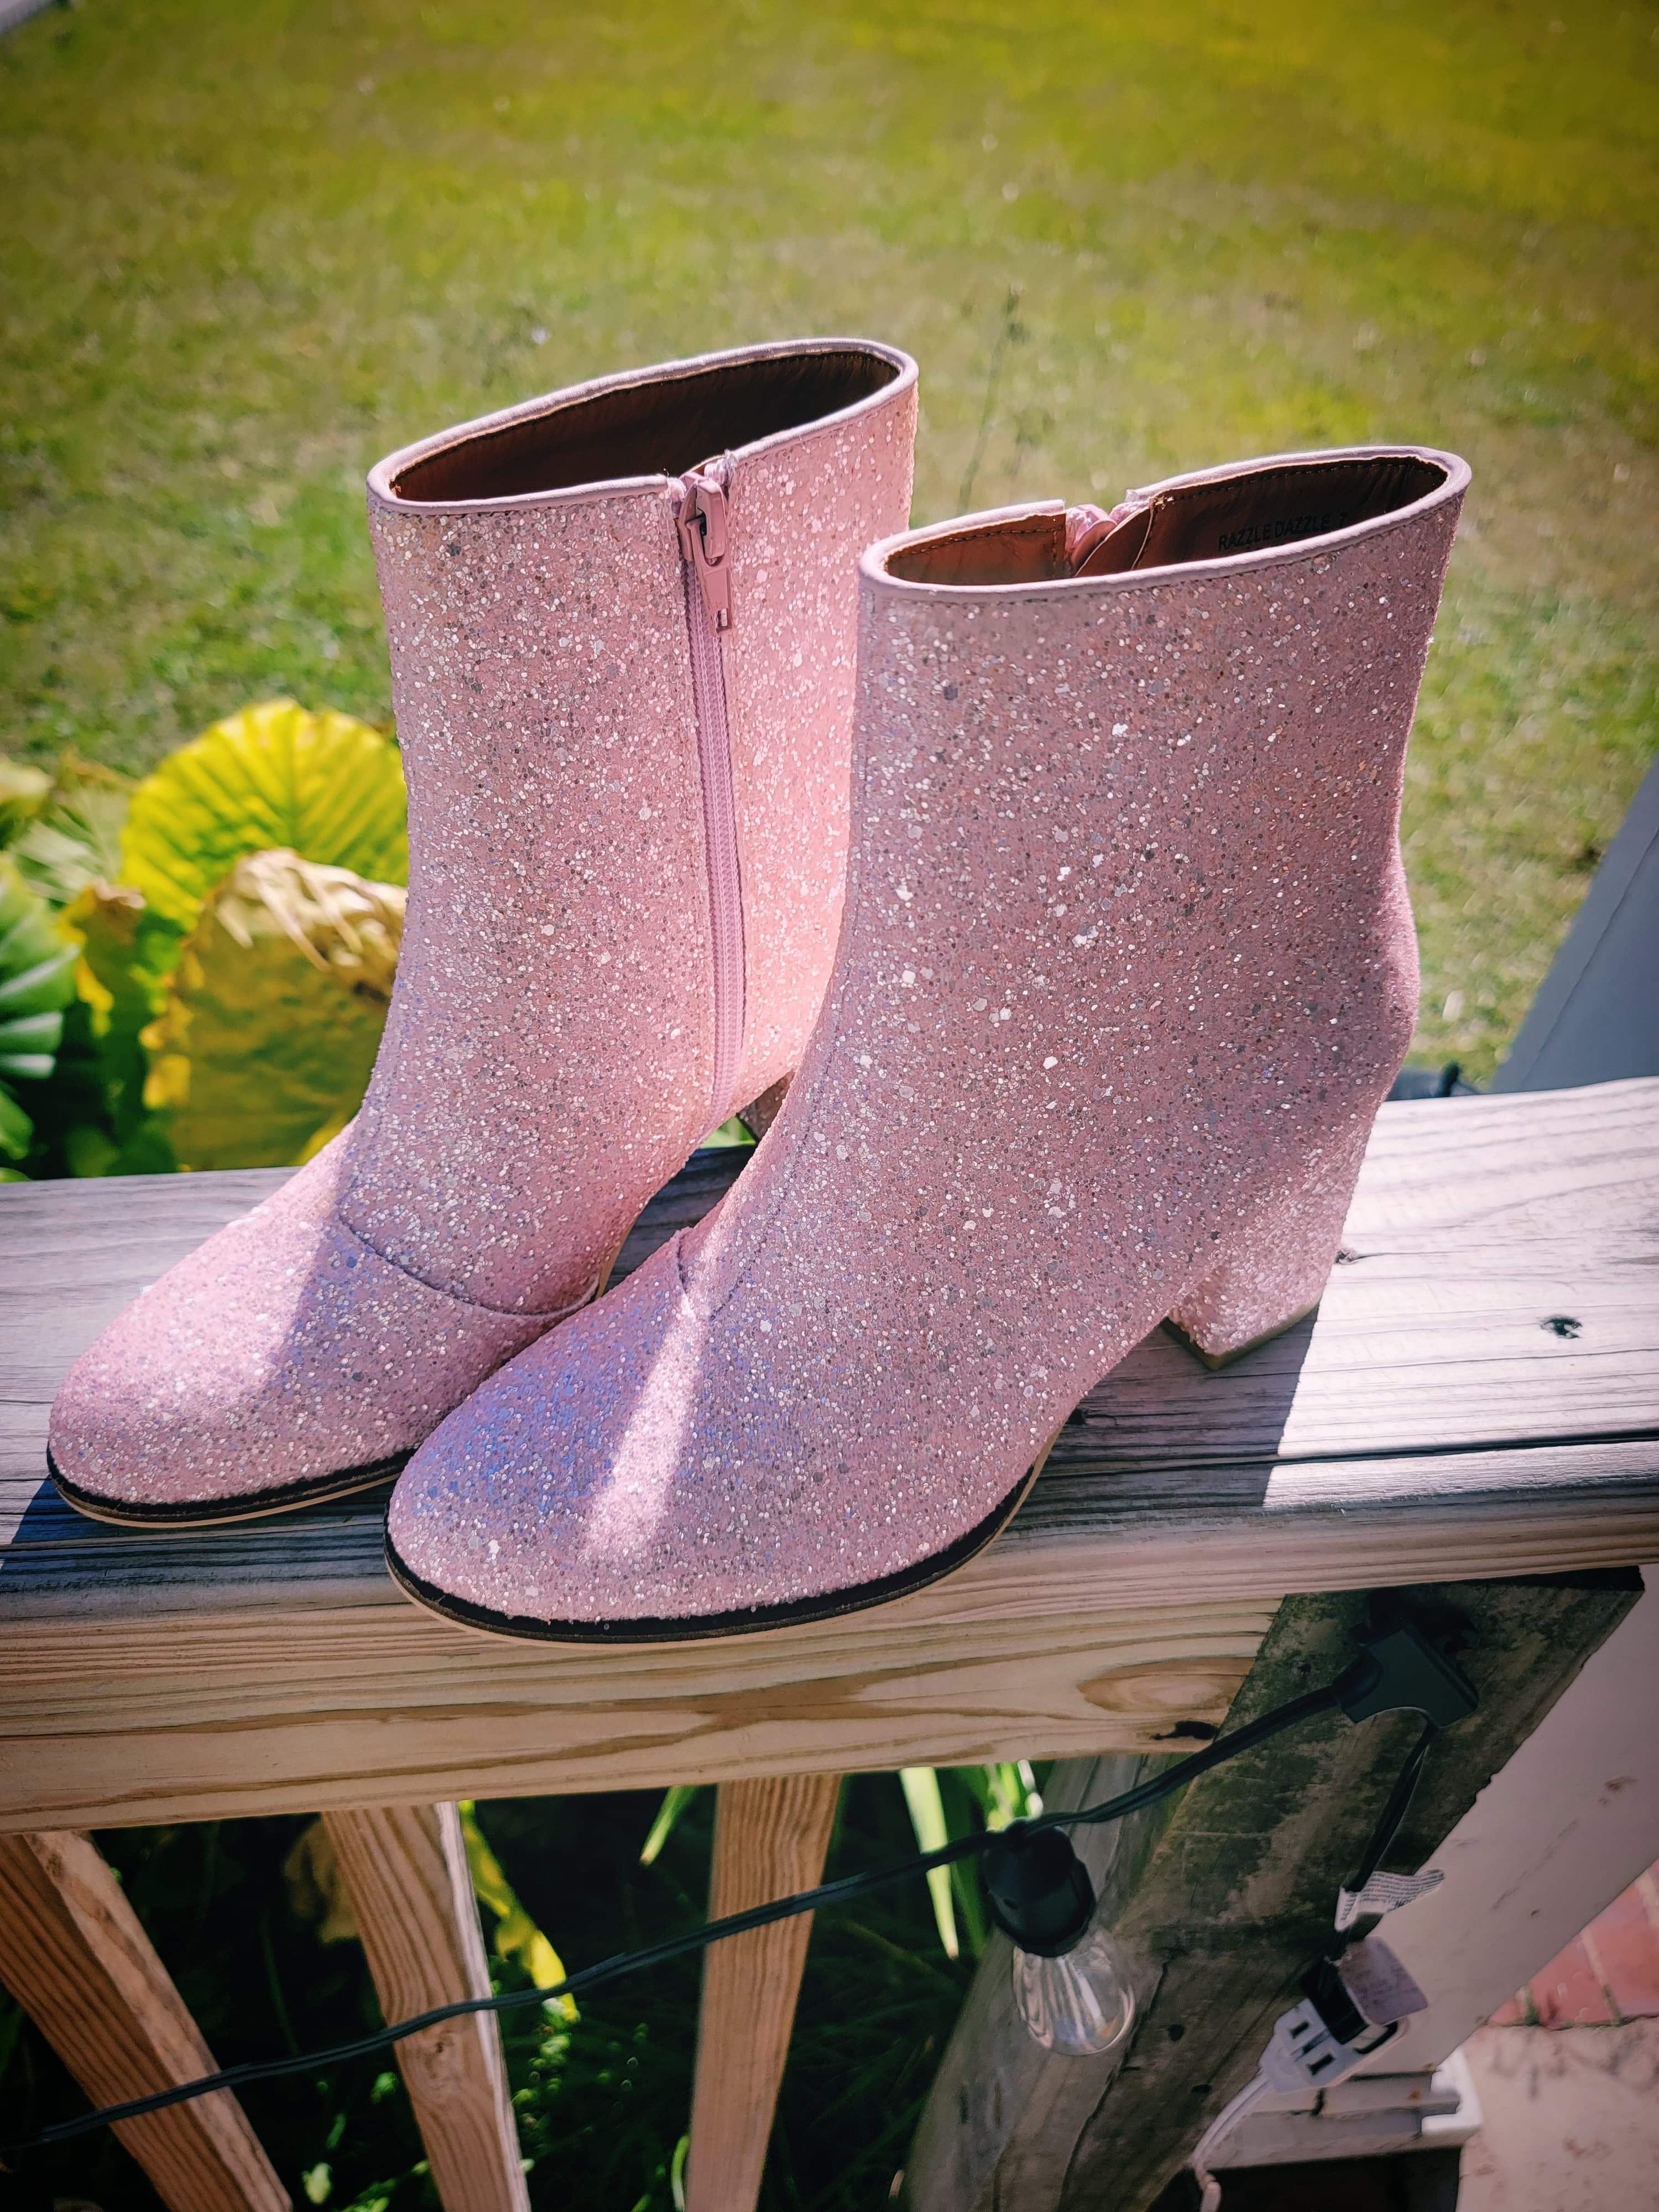 Pink Razzle Dazzle Boots